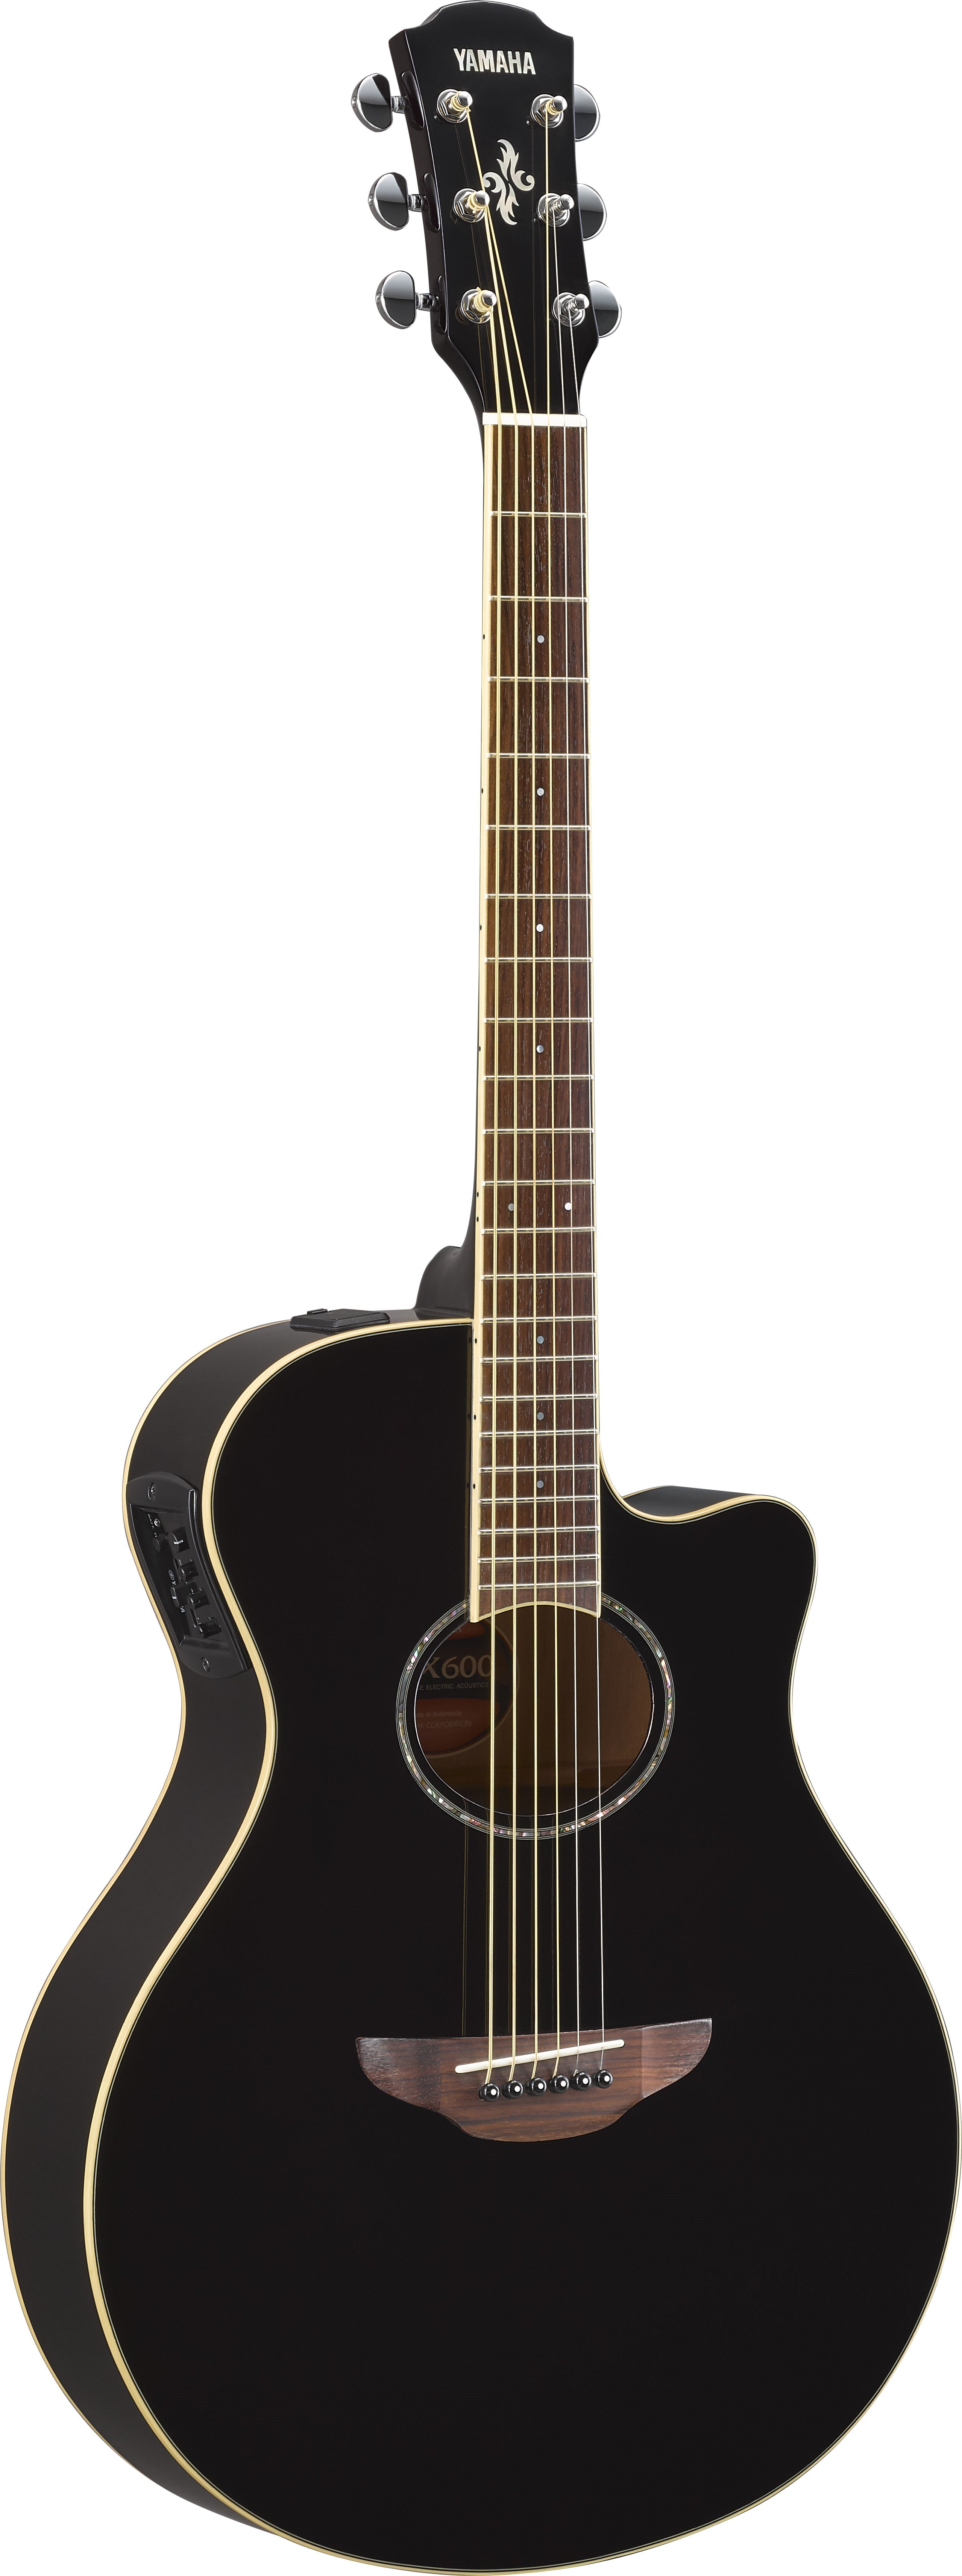 Yamaha Apx600 - Black - Elektroakustische Gitarre - Variation 2